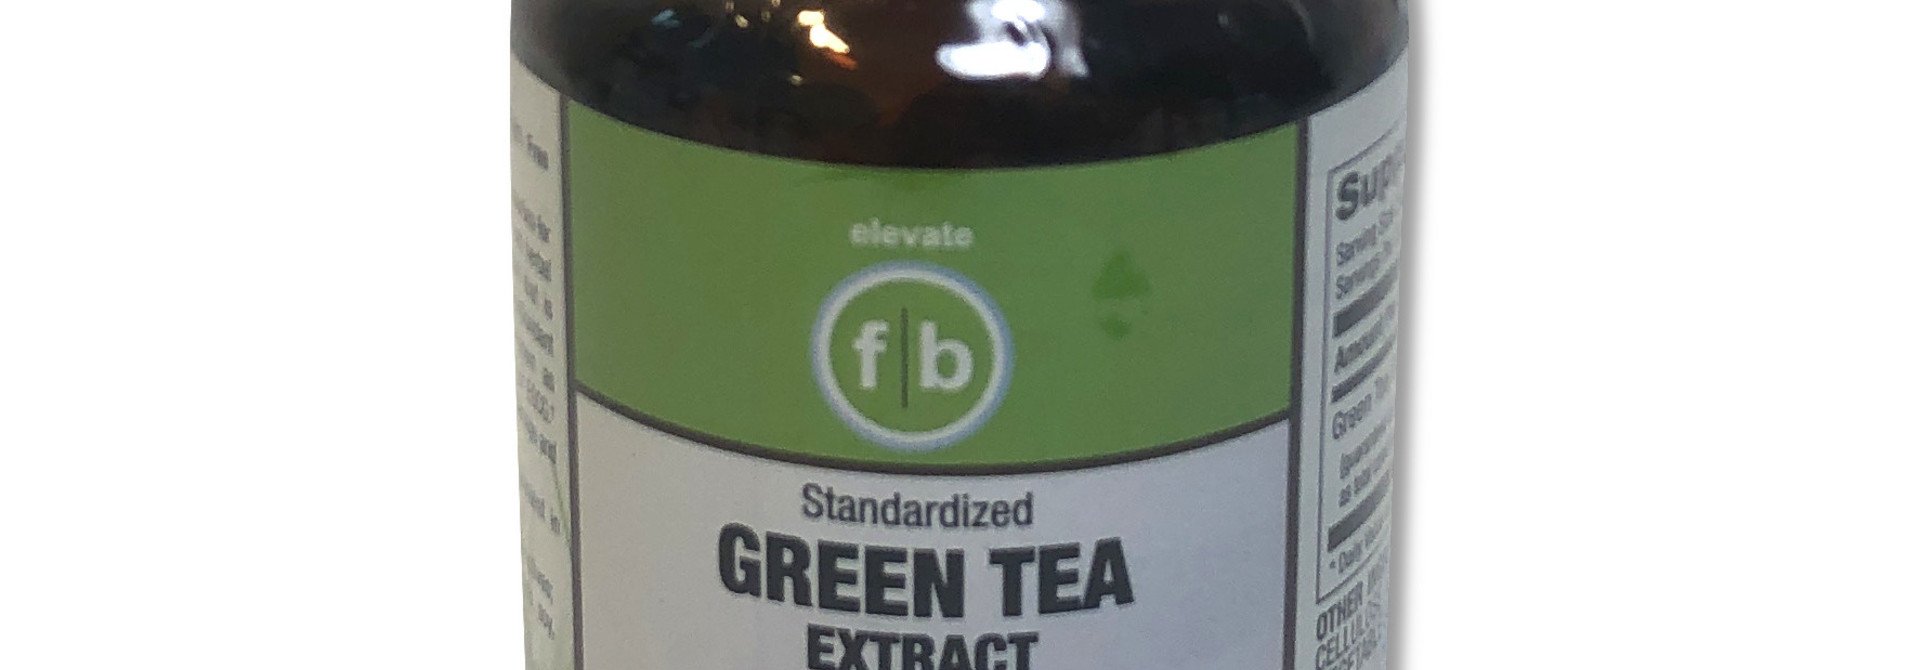 fb GREEN TEA EXTRACT